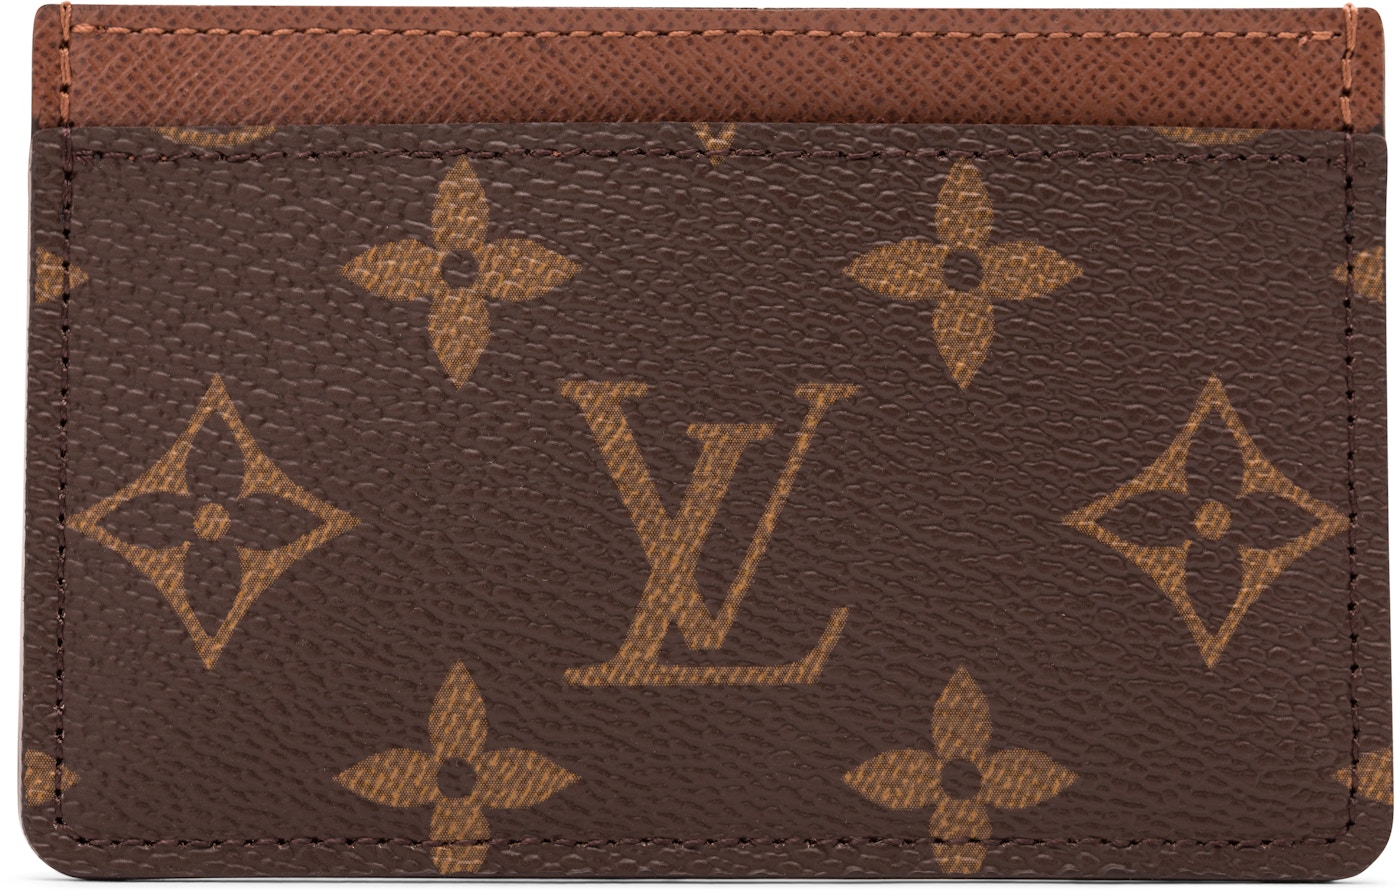 Distribuere Aktuator marked Louis Vuitton Card Holder Monogram